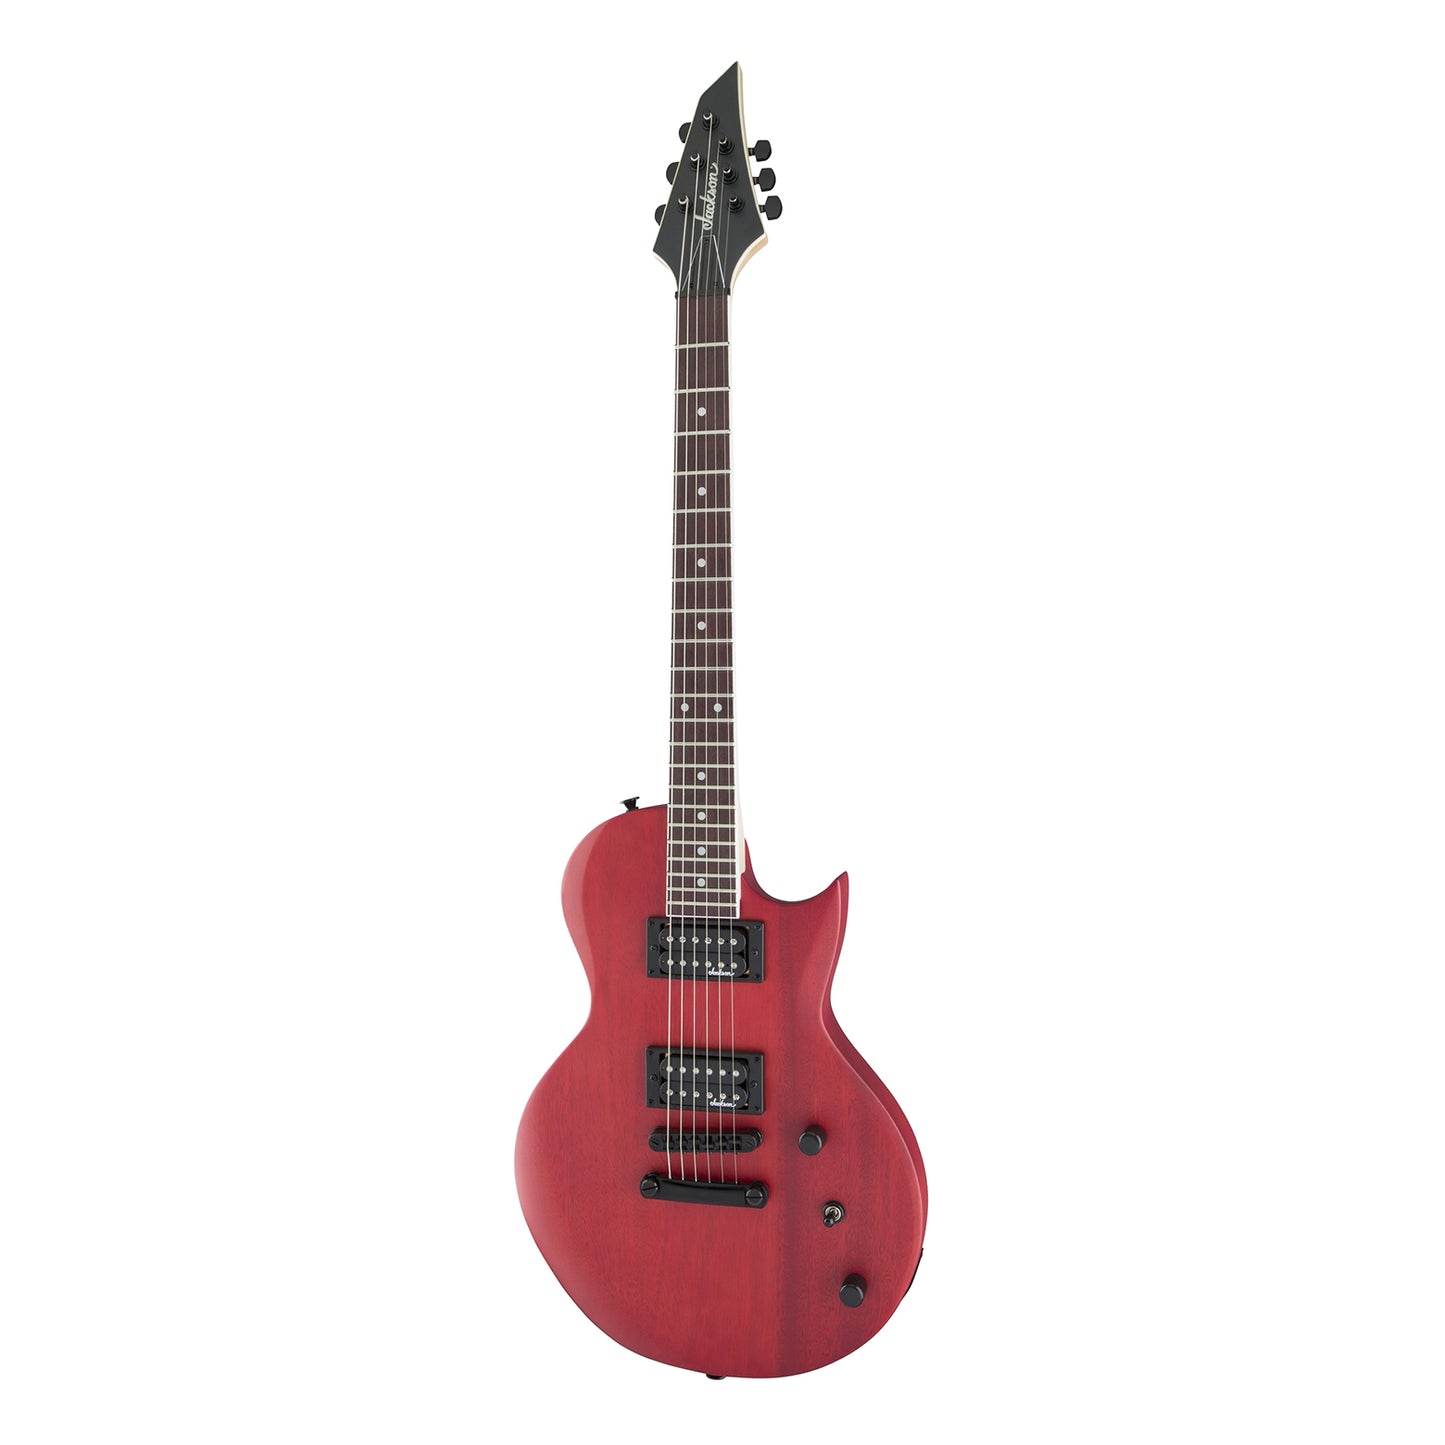 Jackson SC JS22 Monarkh Electric Guitar HH with 22 Frets, Compound Amaranth Fingerboard, Adjustable Bridge (Red Stain, Satin Black, Snow White, T. Sunburst)